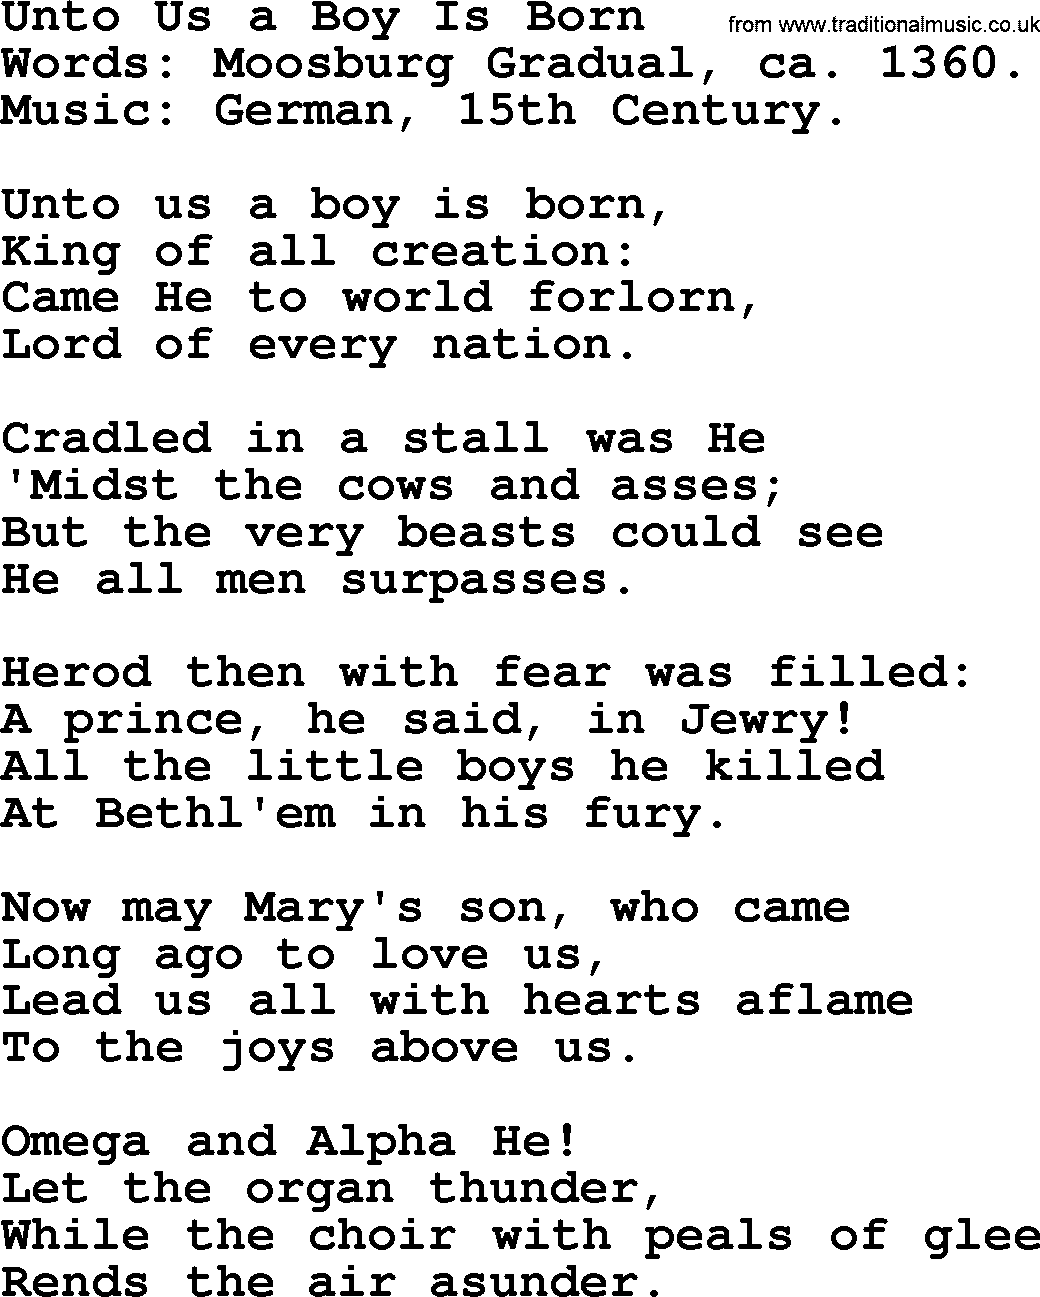 Christmas Hymns, Carols and Songs, title: Unto Us A Boy Is Born, lyrics with PDF